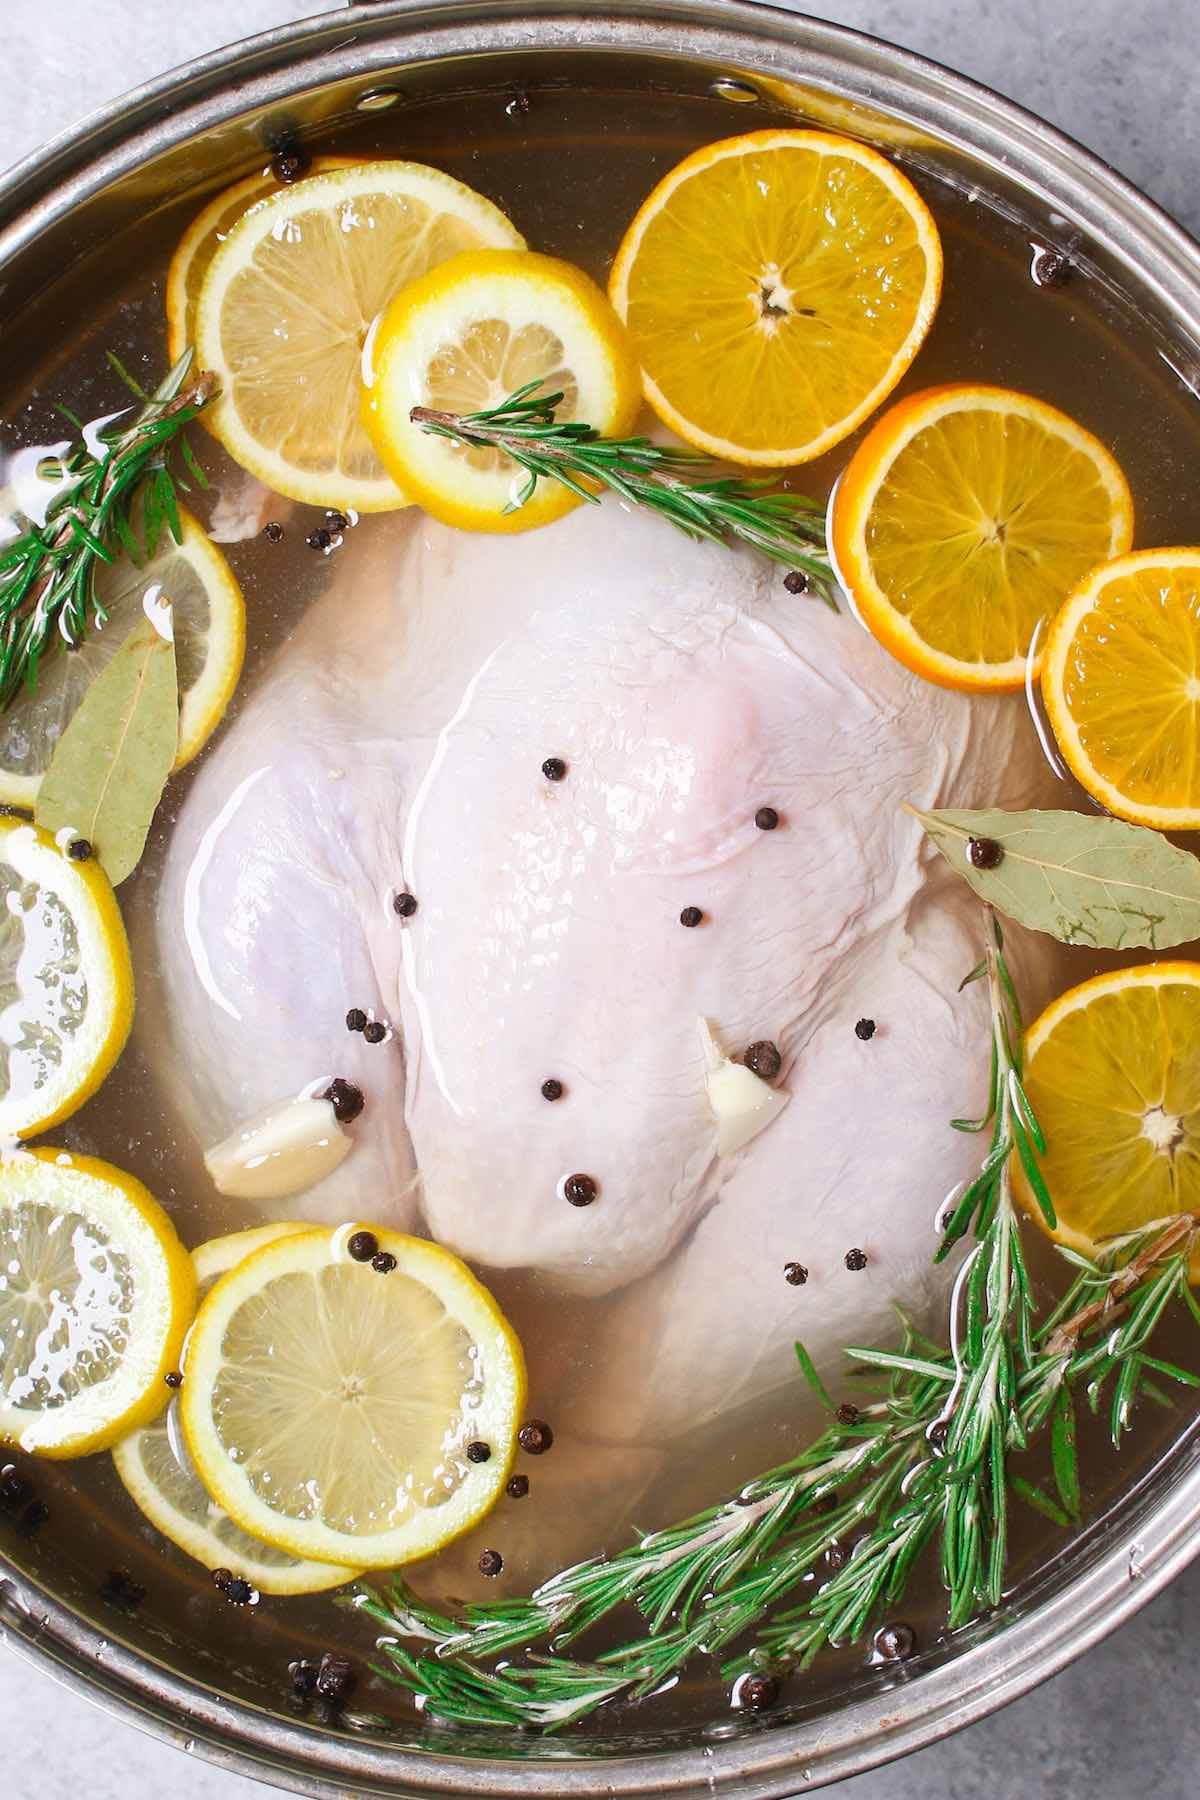 A fresh turkey immersed in brine made with salt, water, vinegar, garlic, rosemary, peppercorns, orange slices, lemon slices and bay leaves